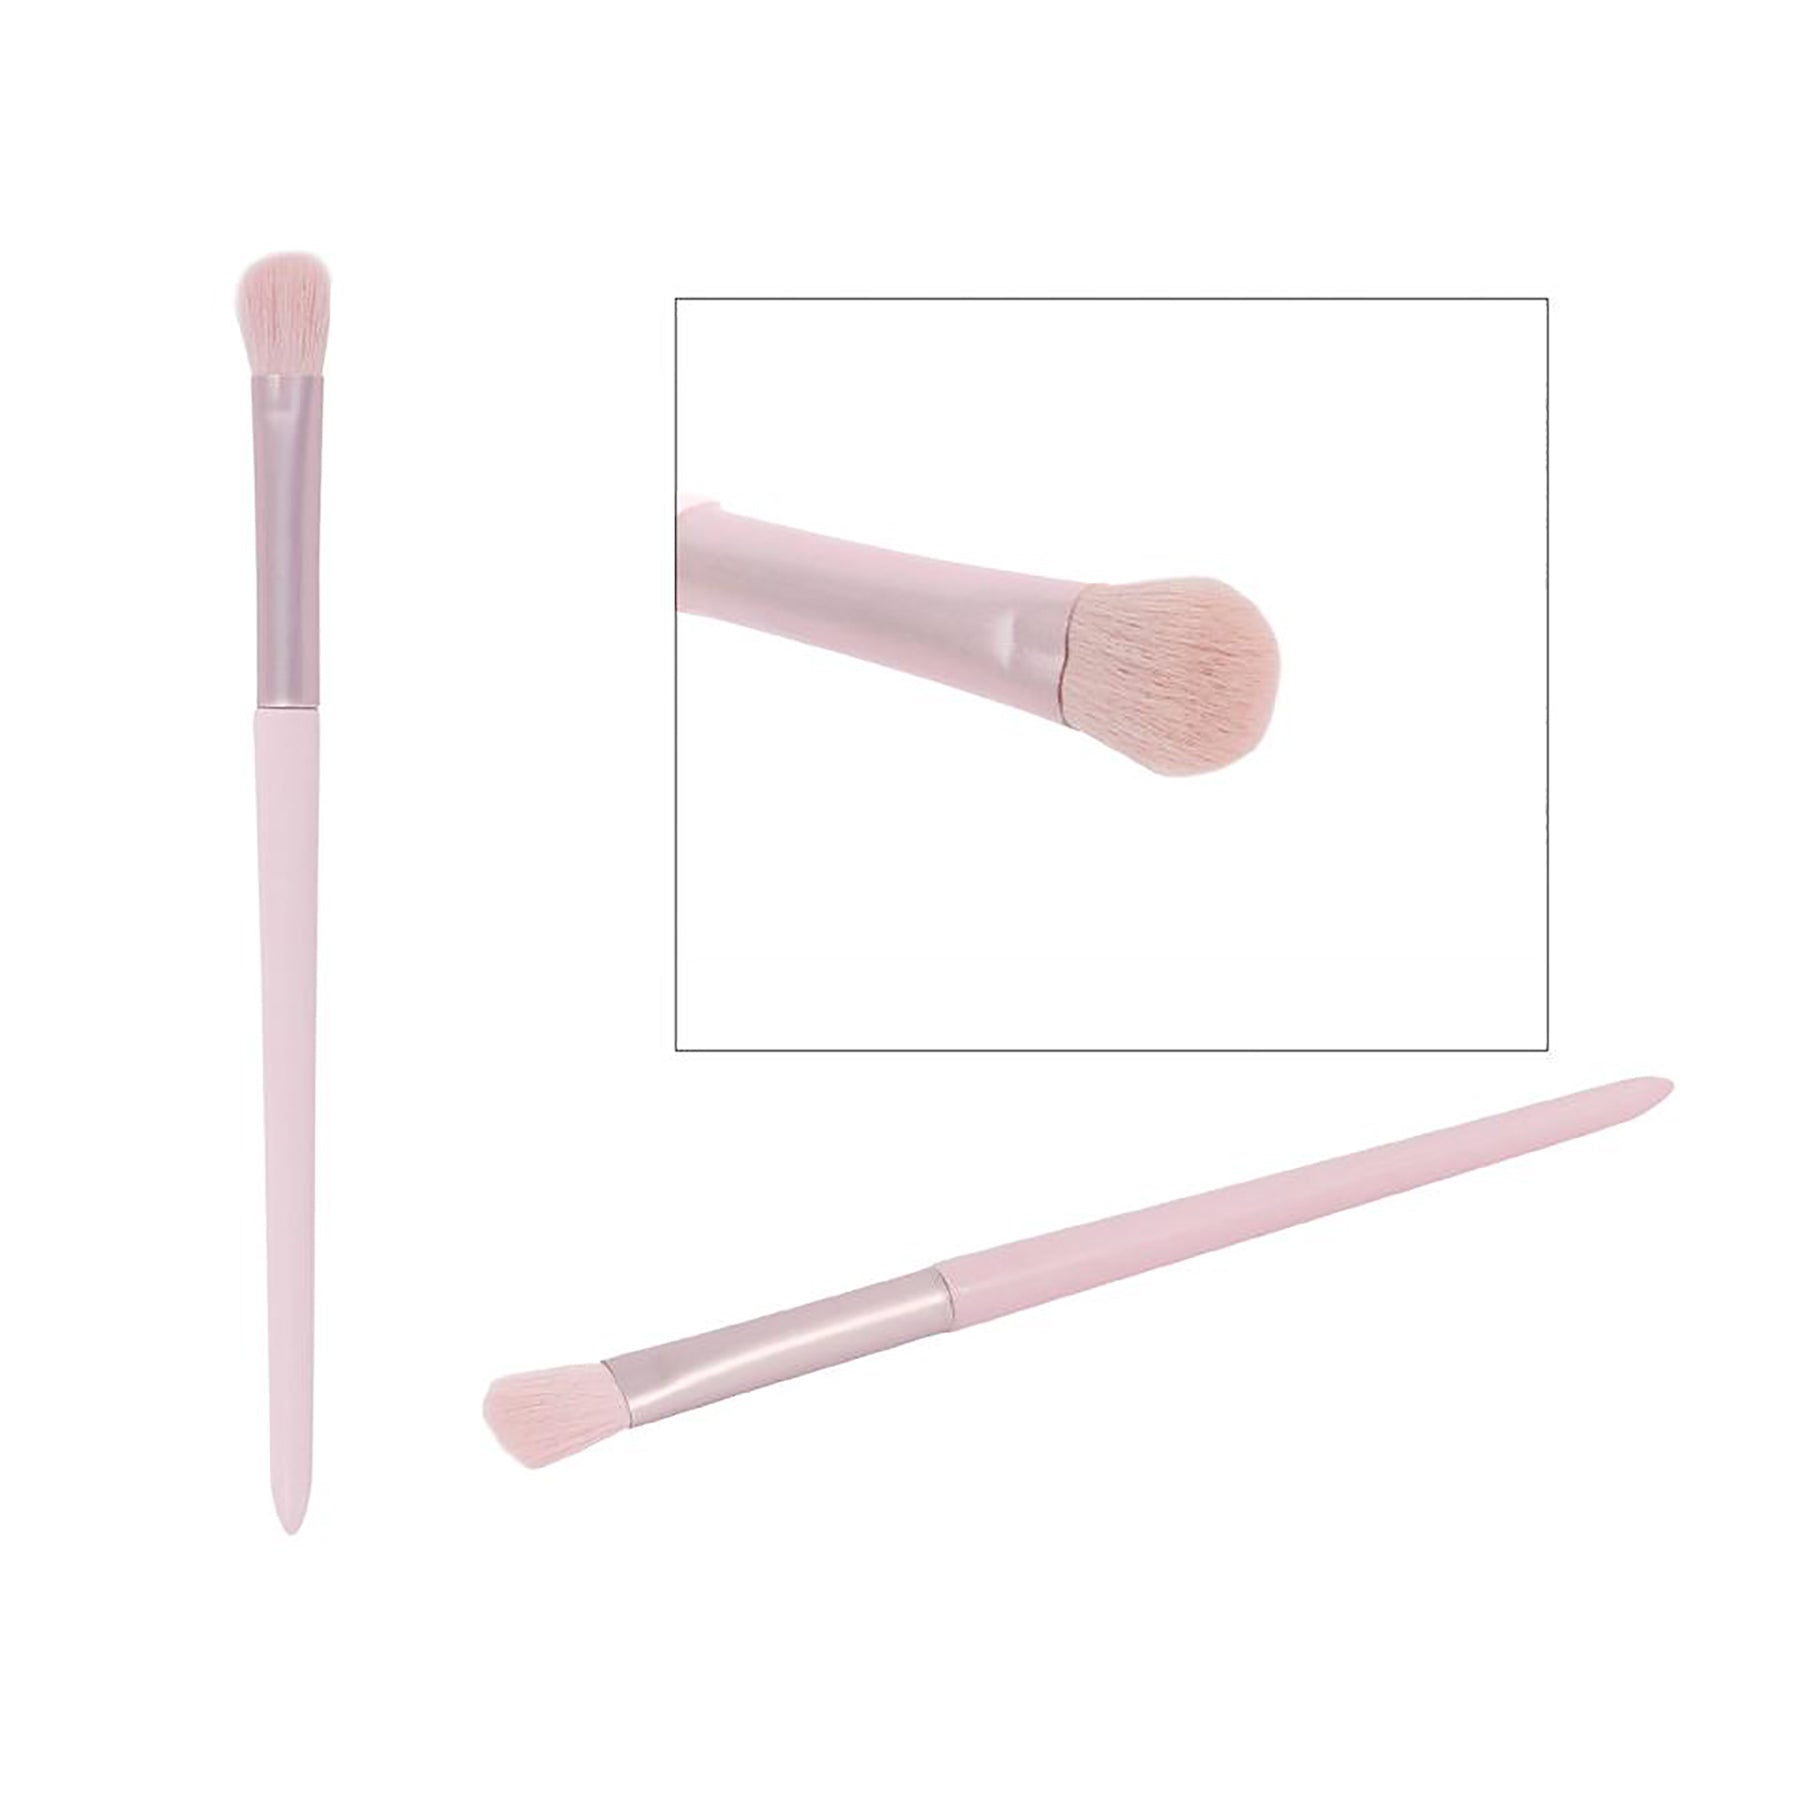 Bodico Shadow Brush Oval Pink-blush 6.25in Bristles 0.6in